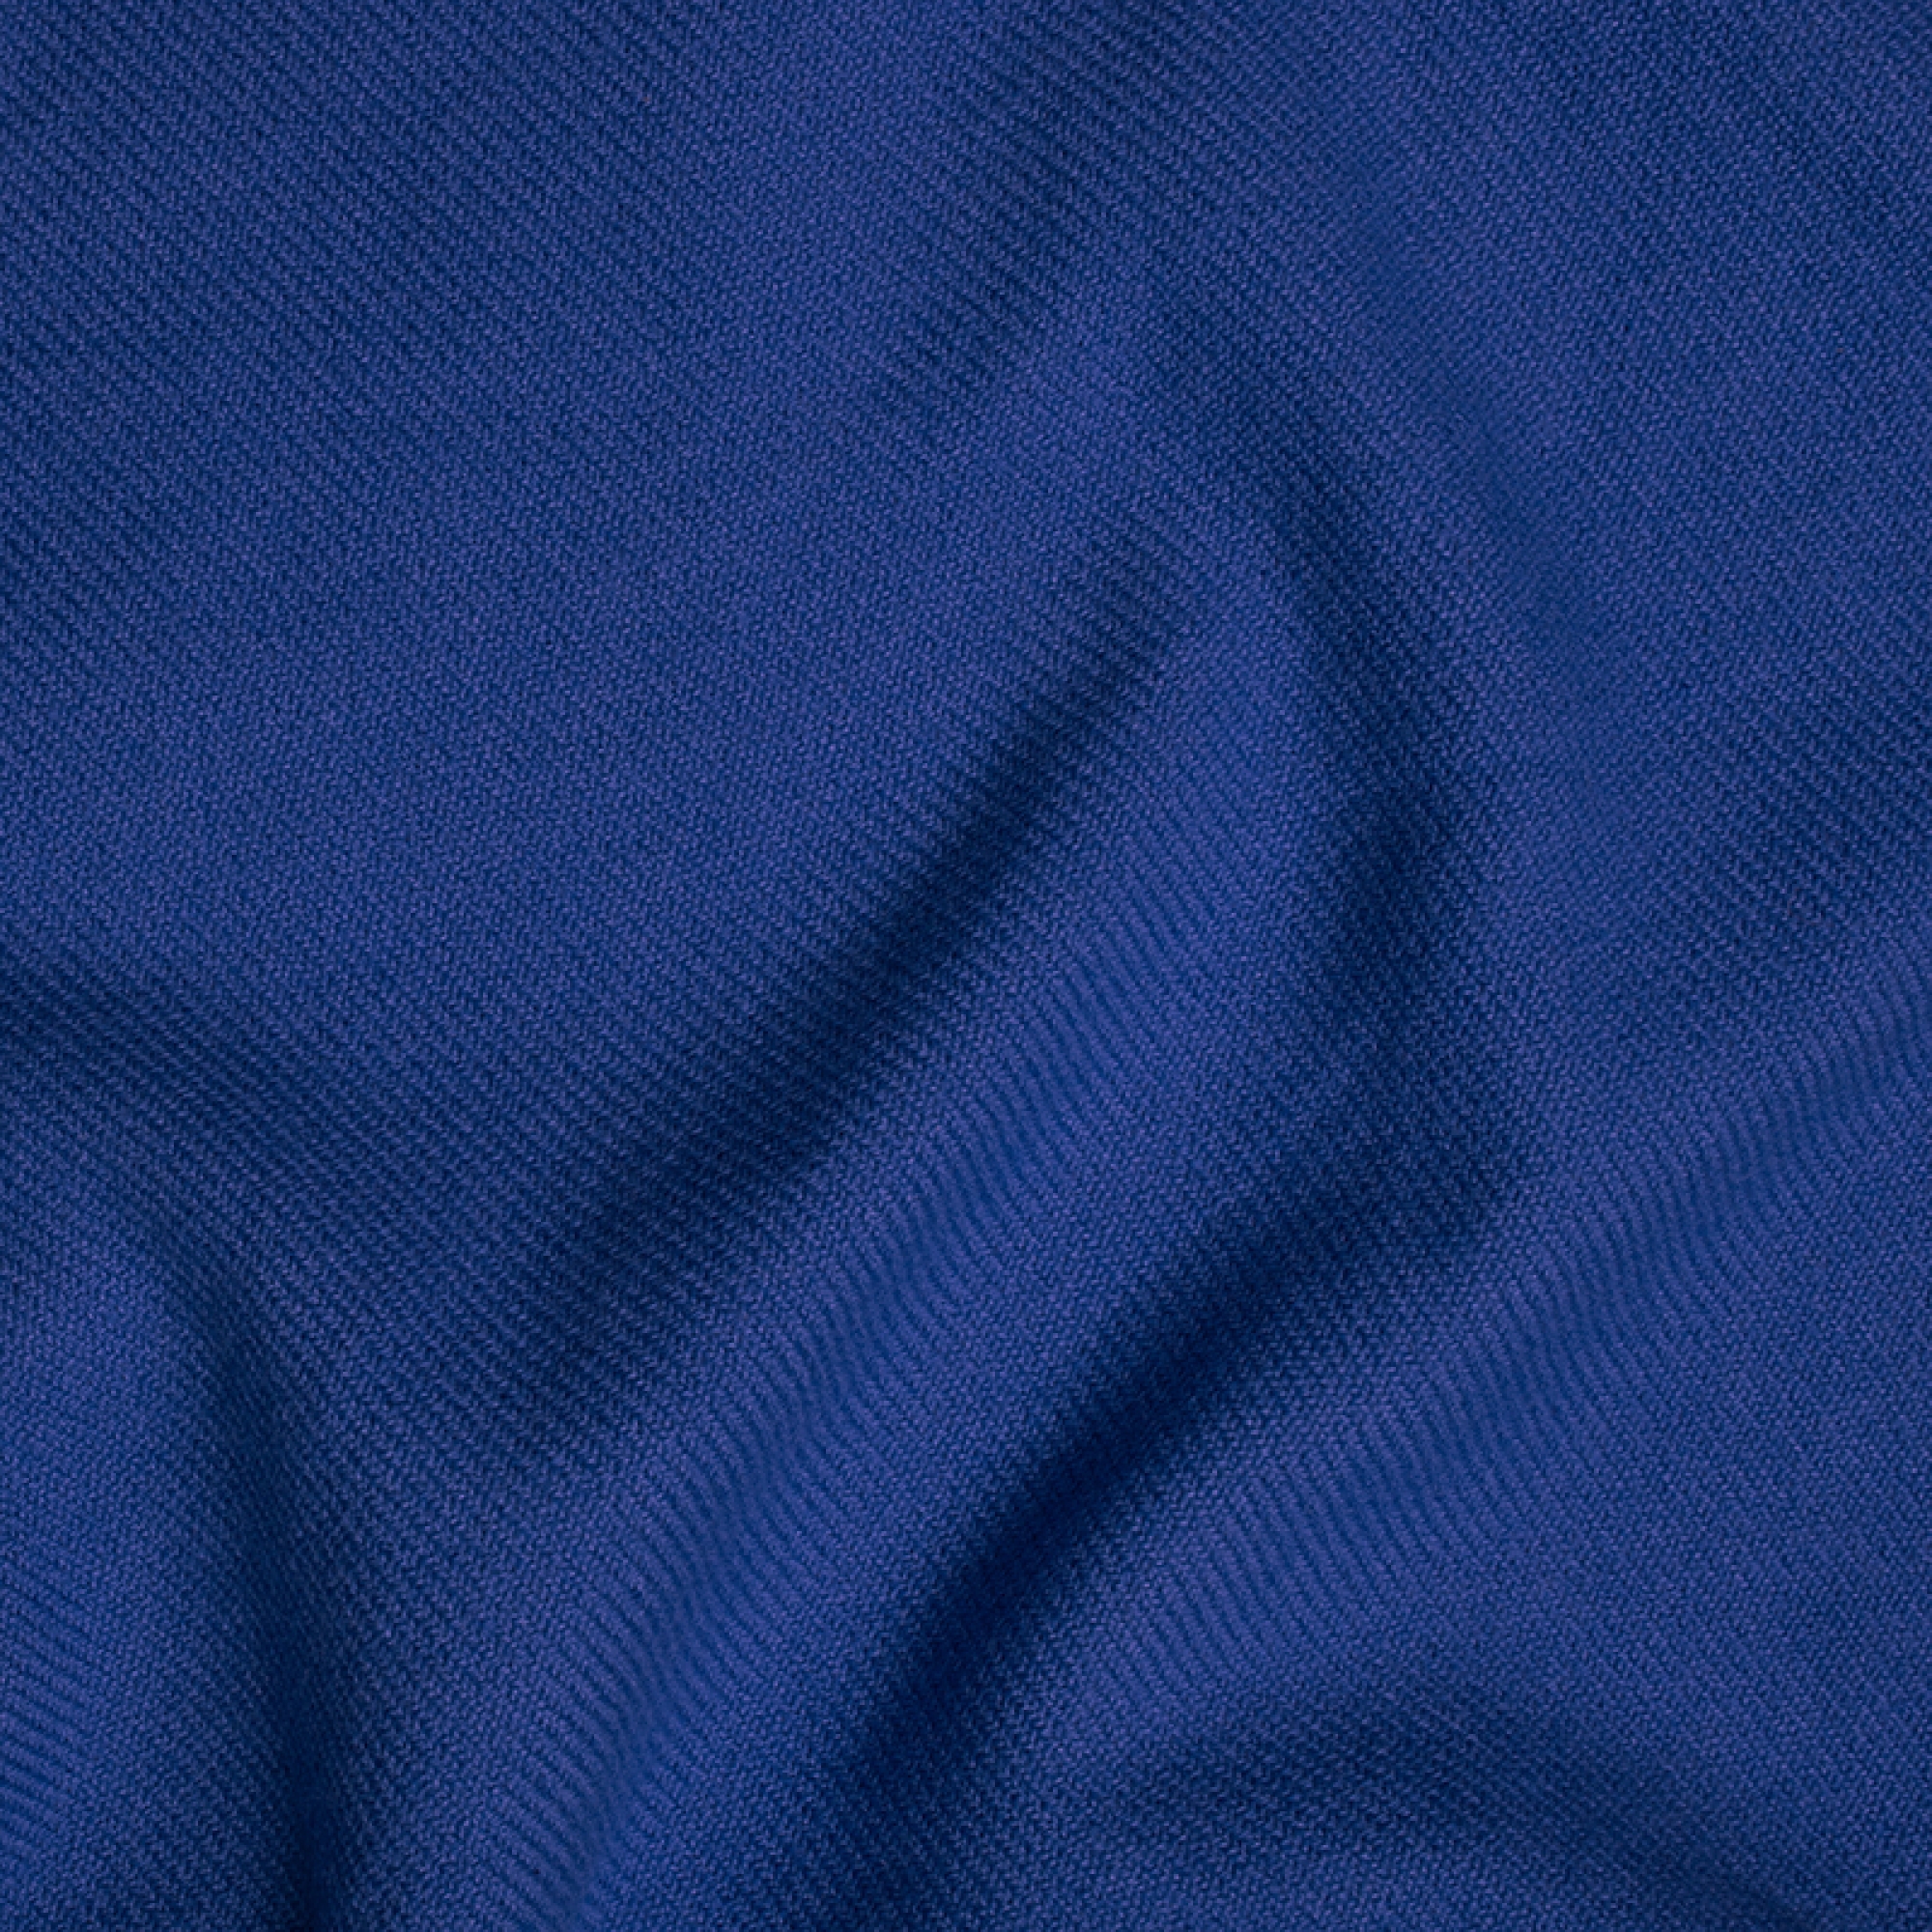 Cashmere accessories blanket toodoo plain l 220 x 220 light cobalt blue 220x220cm